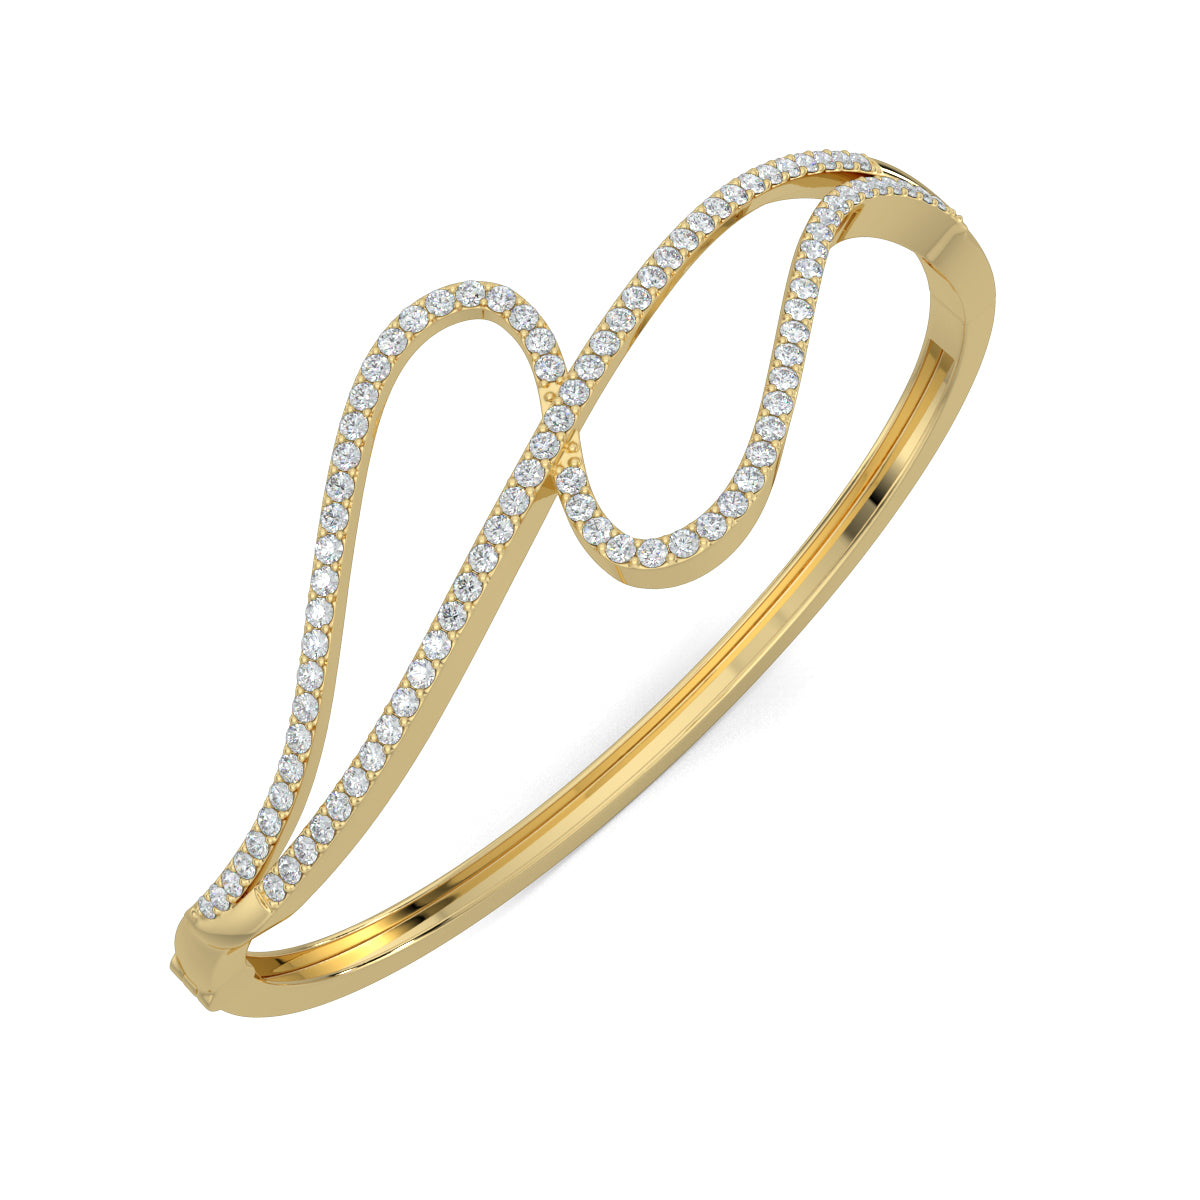 Yellow Gold, Diamond bracelet, Amore bracelet, Italian design, natural diamonds, lab-grown diamonds, luxury accessory, elegant jewelry